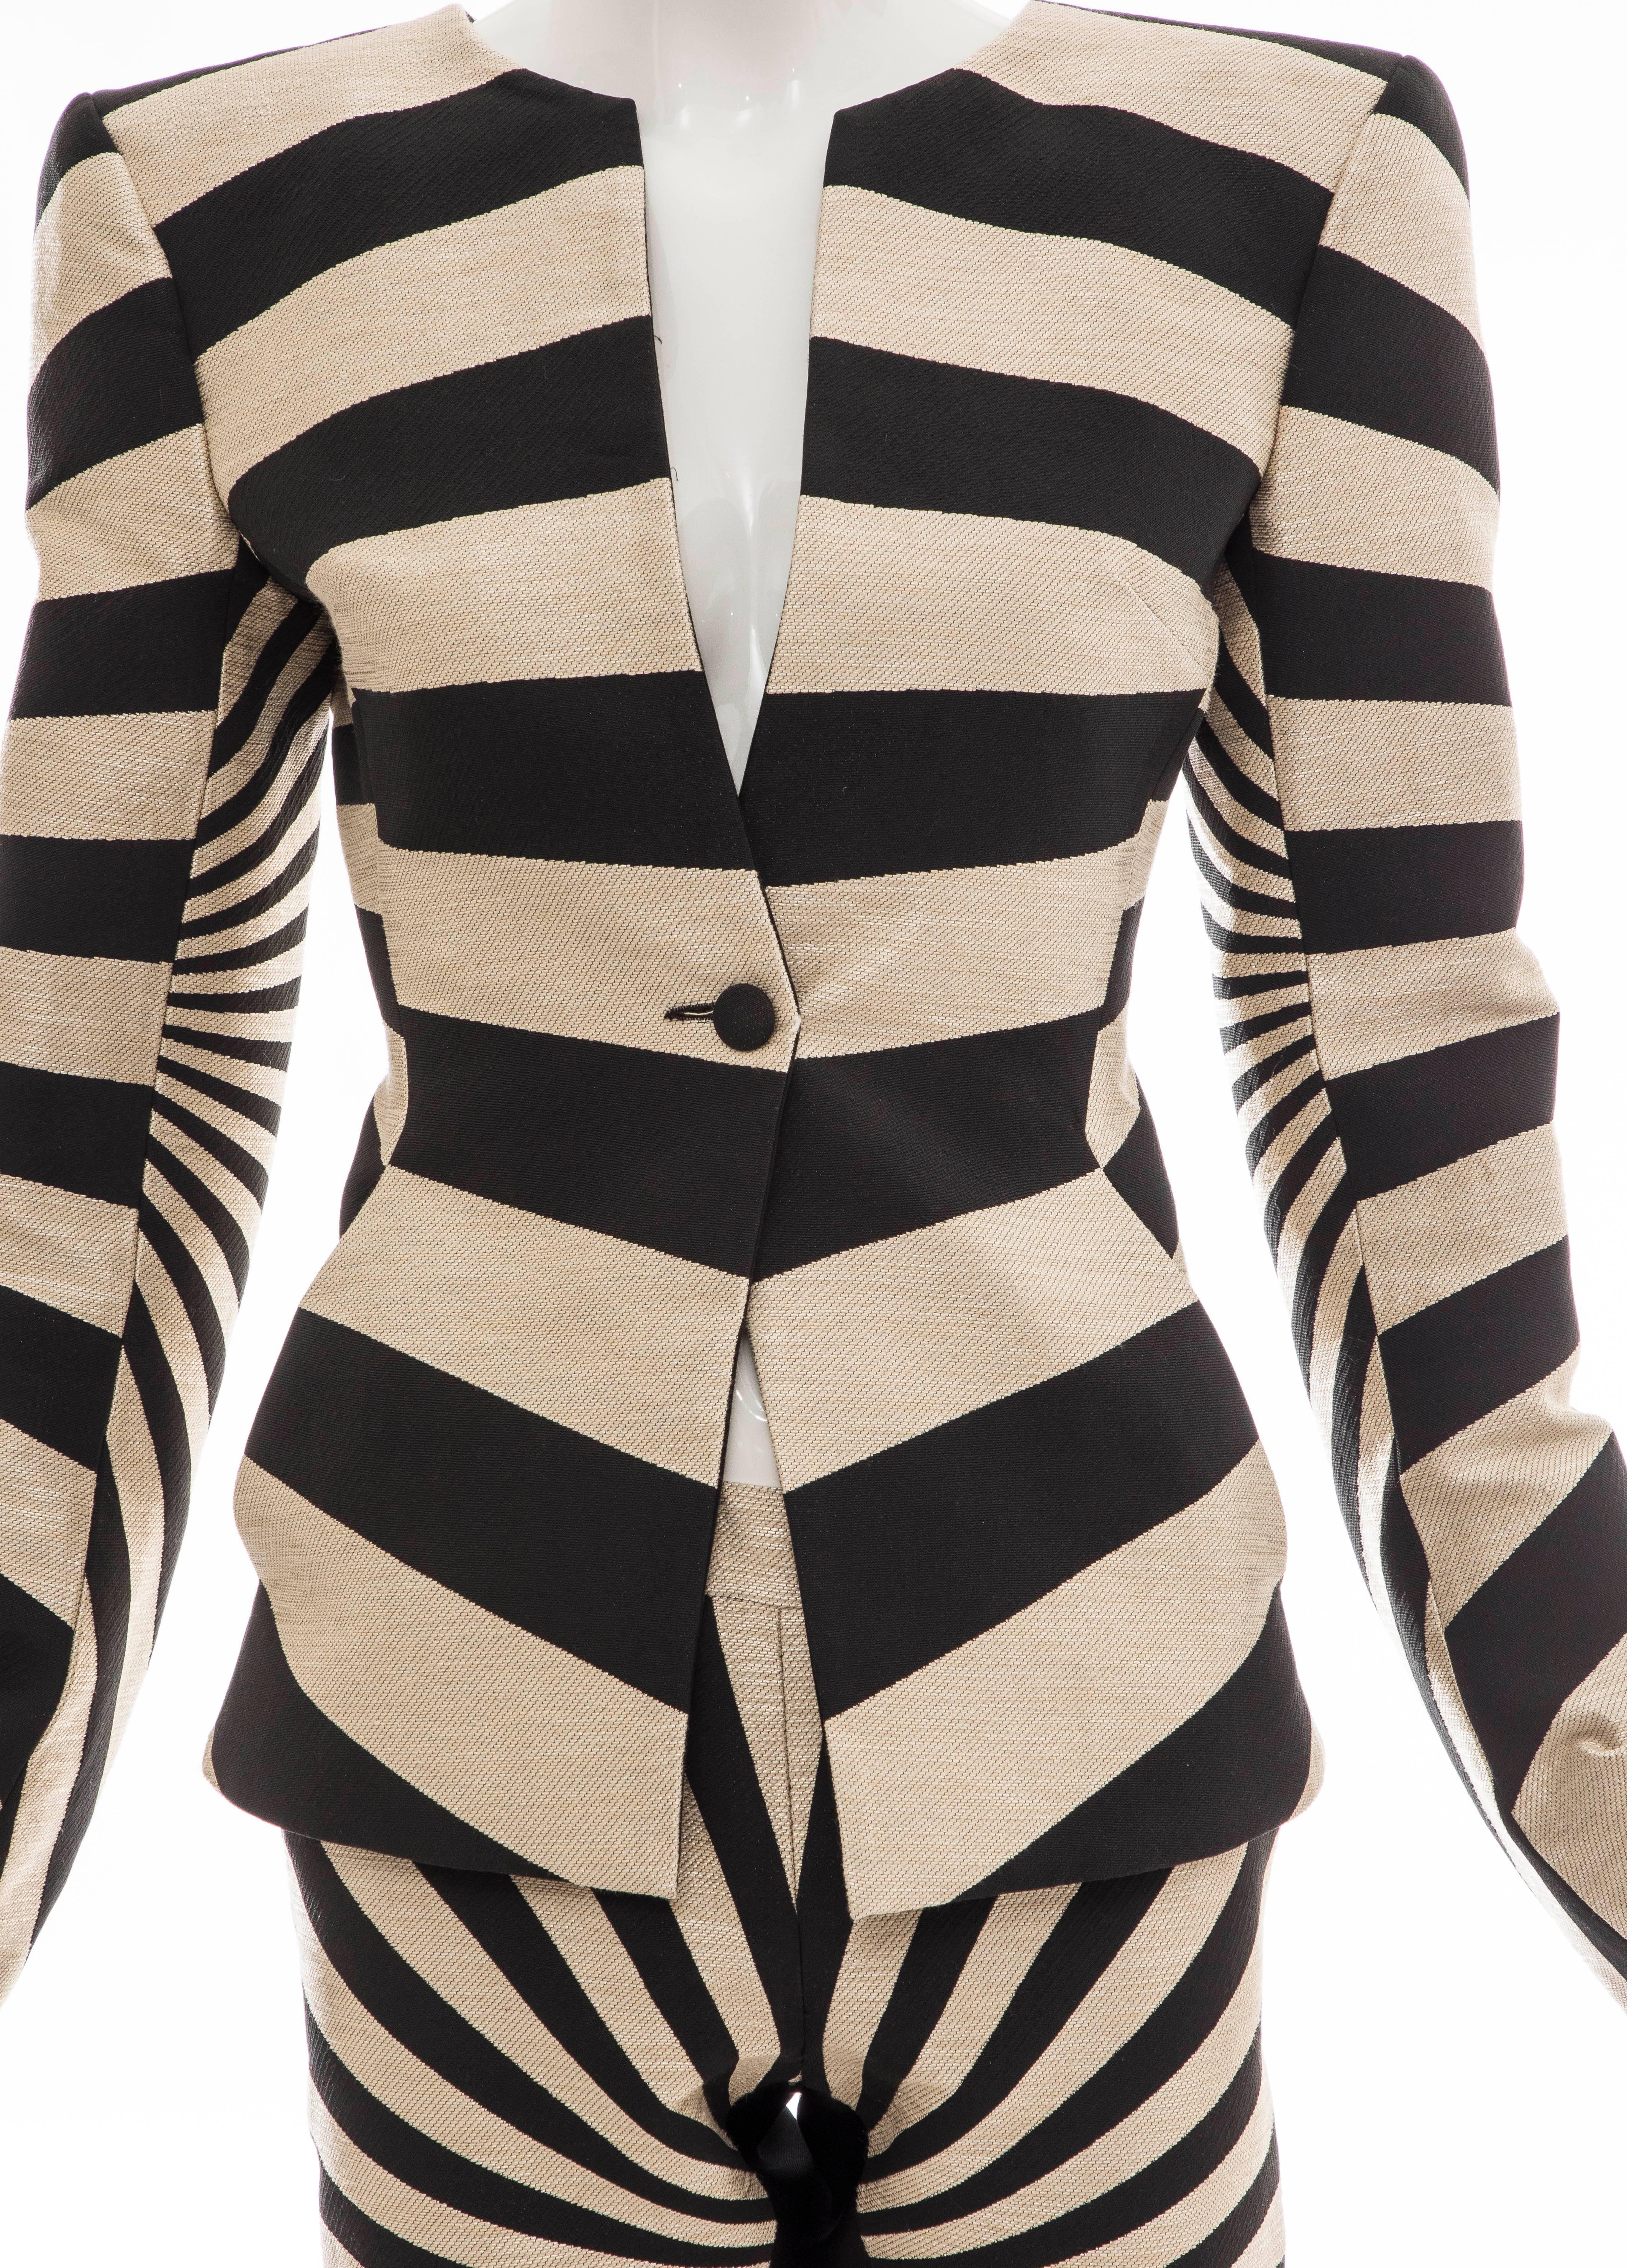 Gareth Pugh Woven Striped Pattern Pantsuit, Spring 2017 For Sale 2